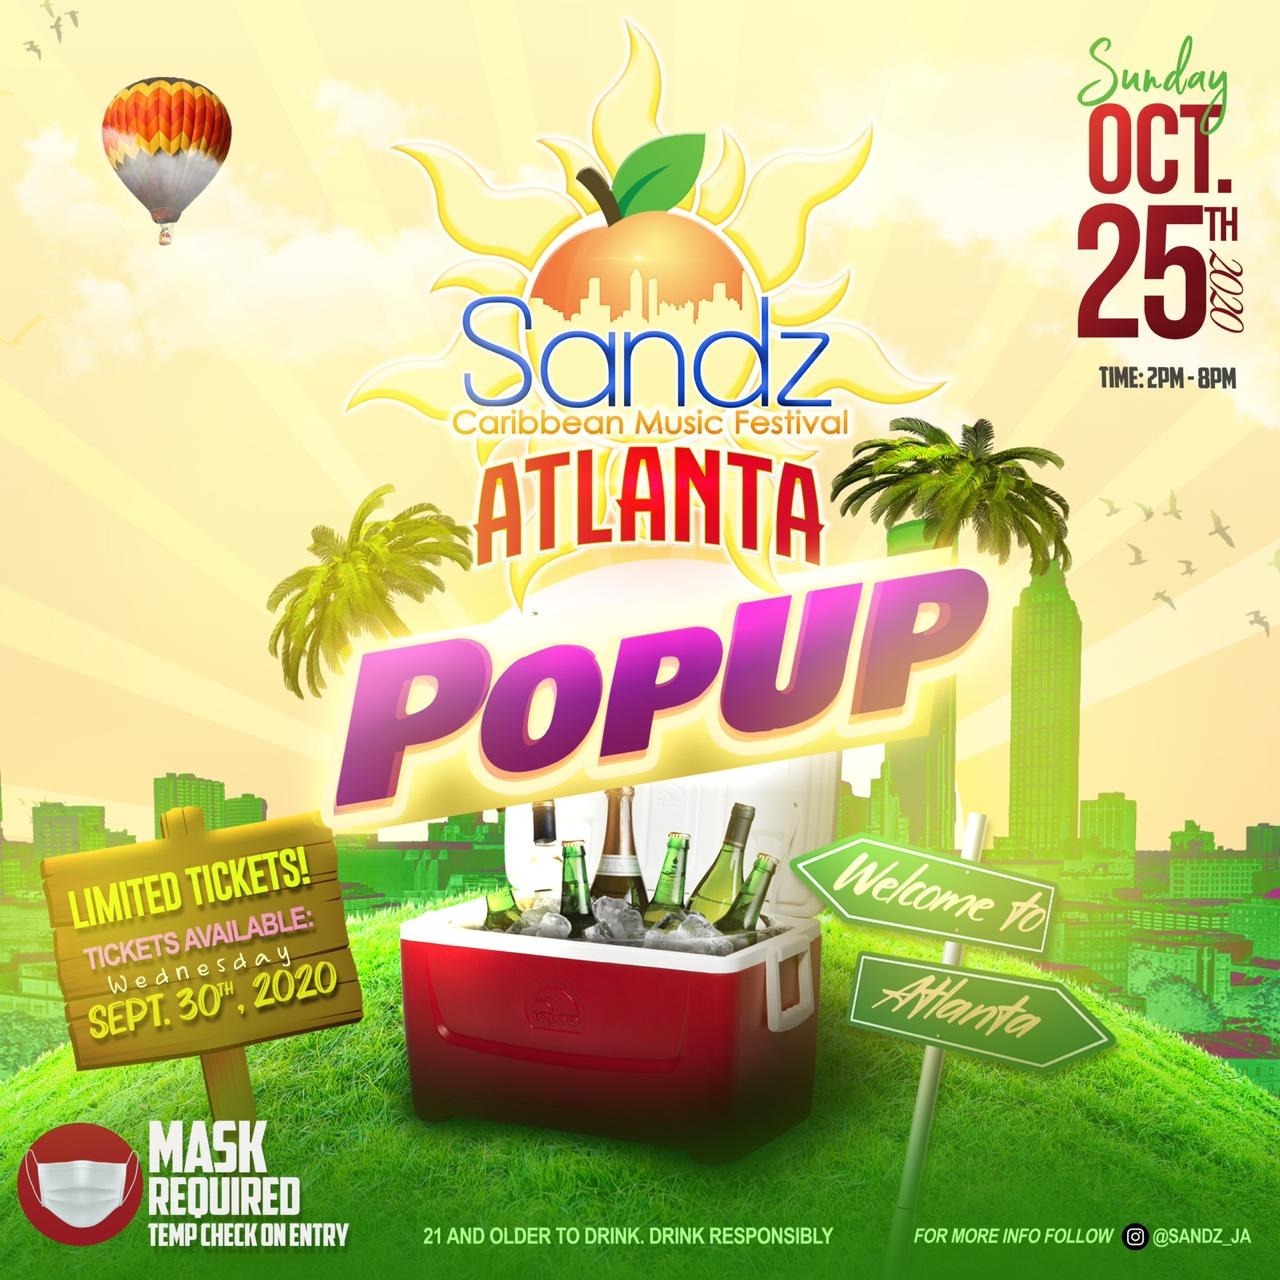 Sandz - Atlanta Popup Party 